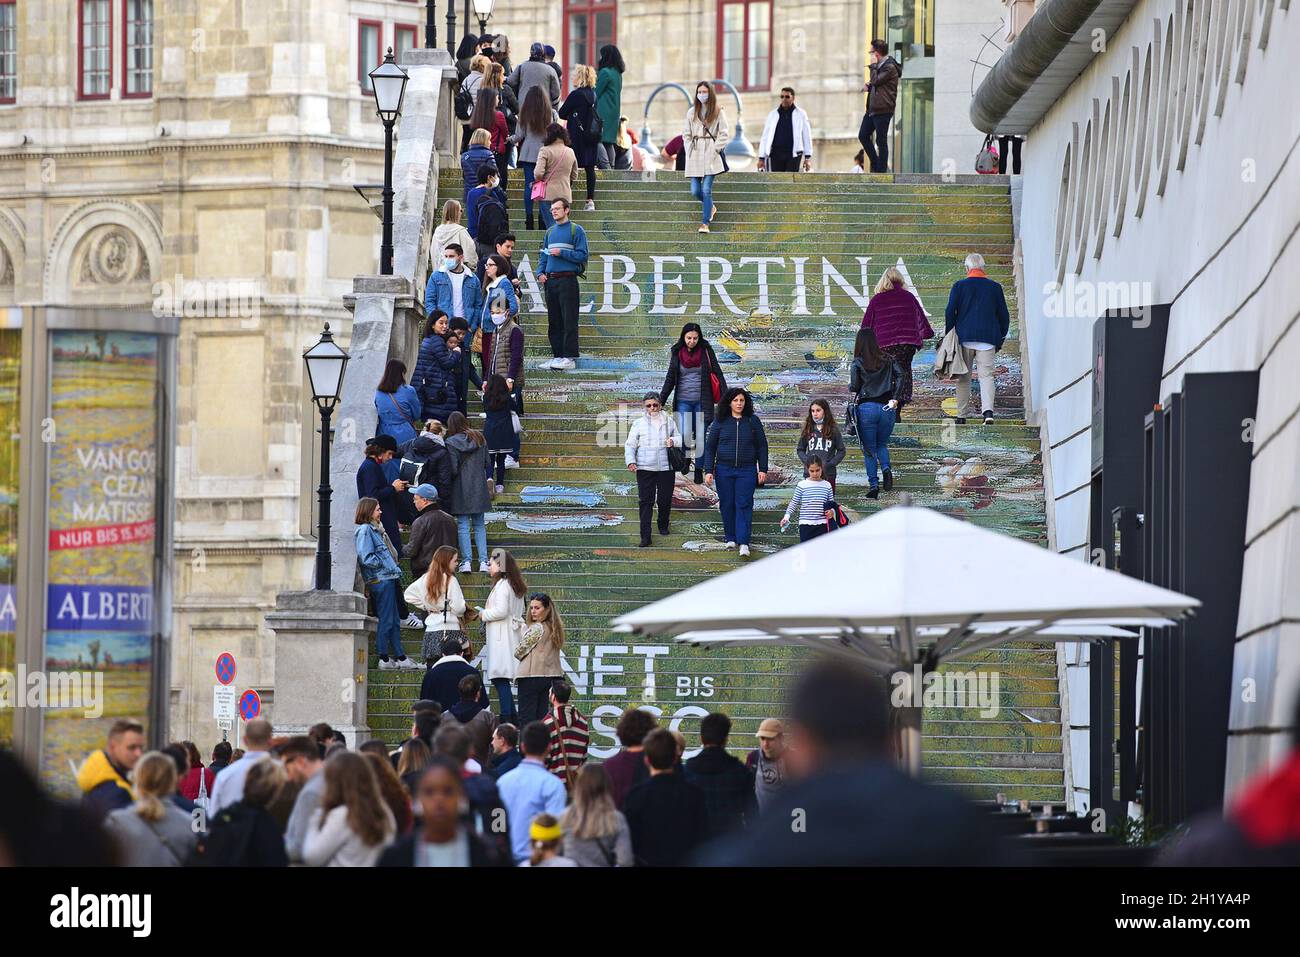 Warteschlange beim Aufgang zur Albertina à Wien, Österreich, Europa - Queue à l'entrée de l'Albertina à Vienne, Autriche, Europe Banque D'Images